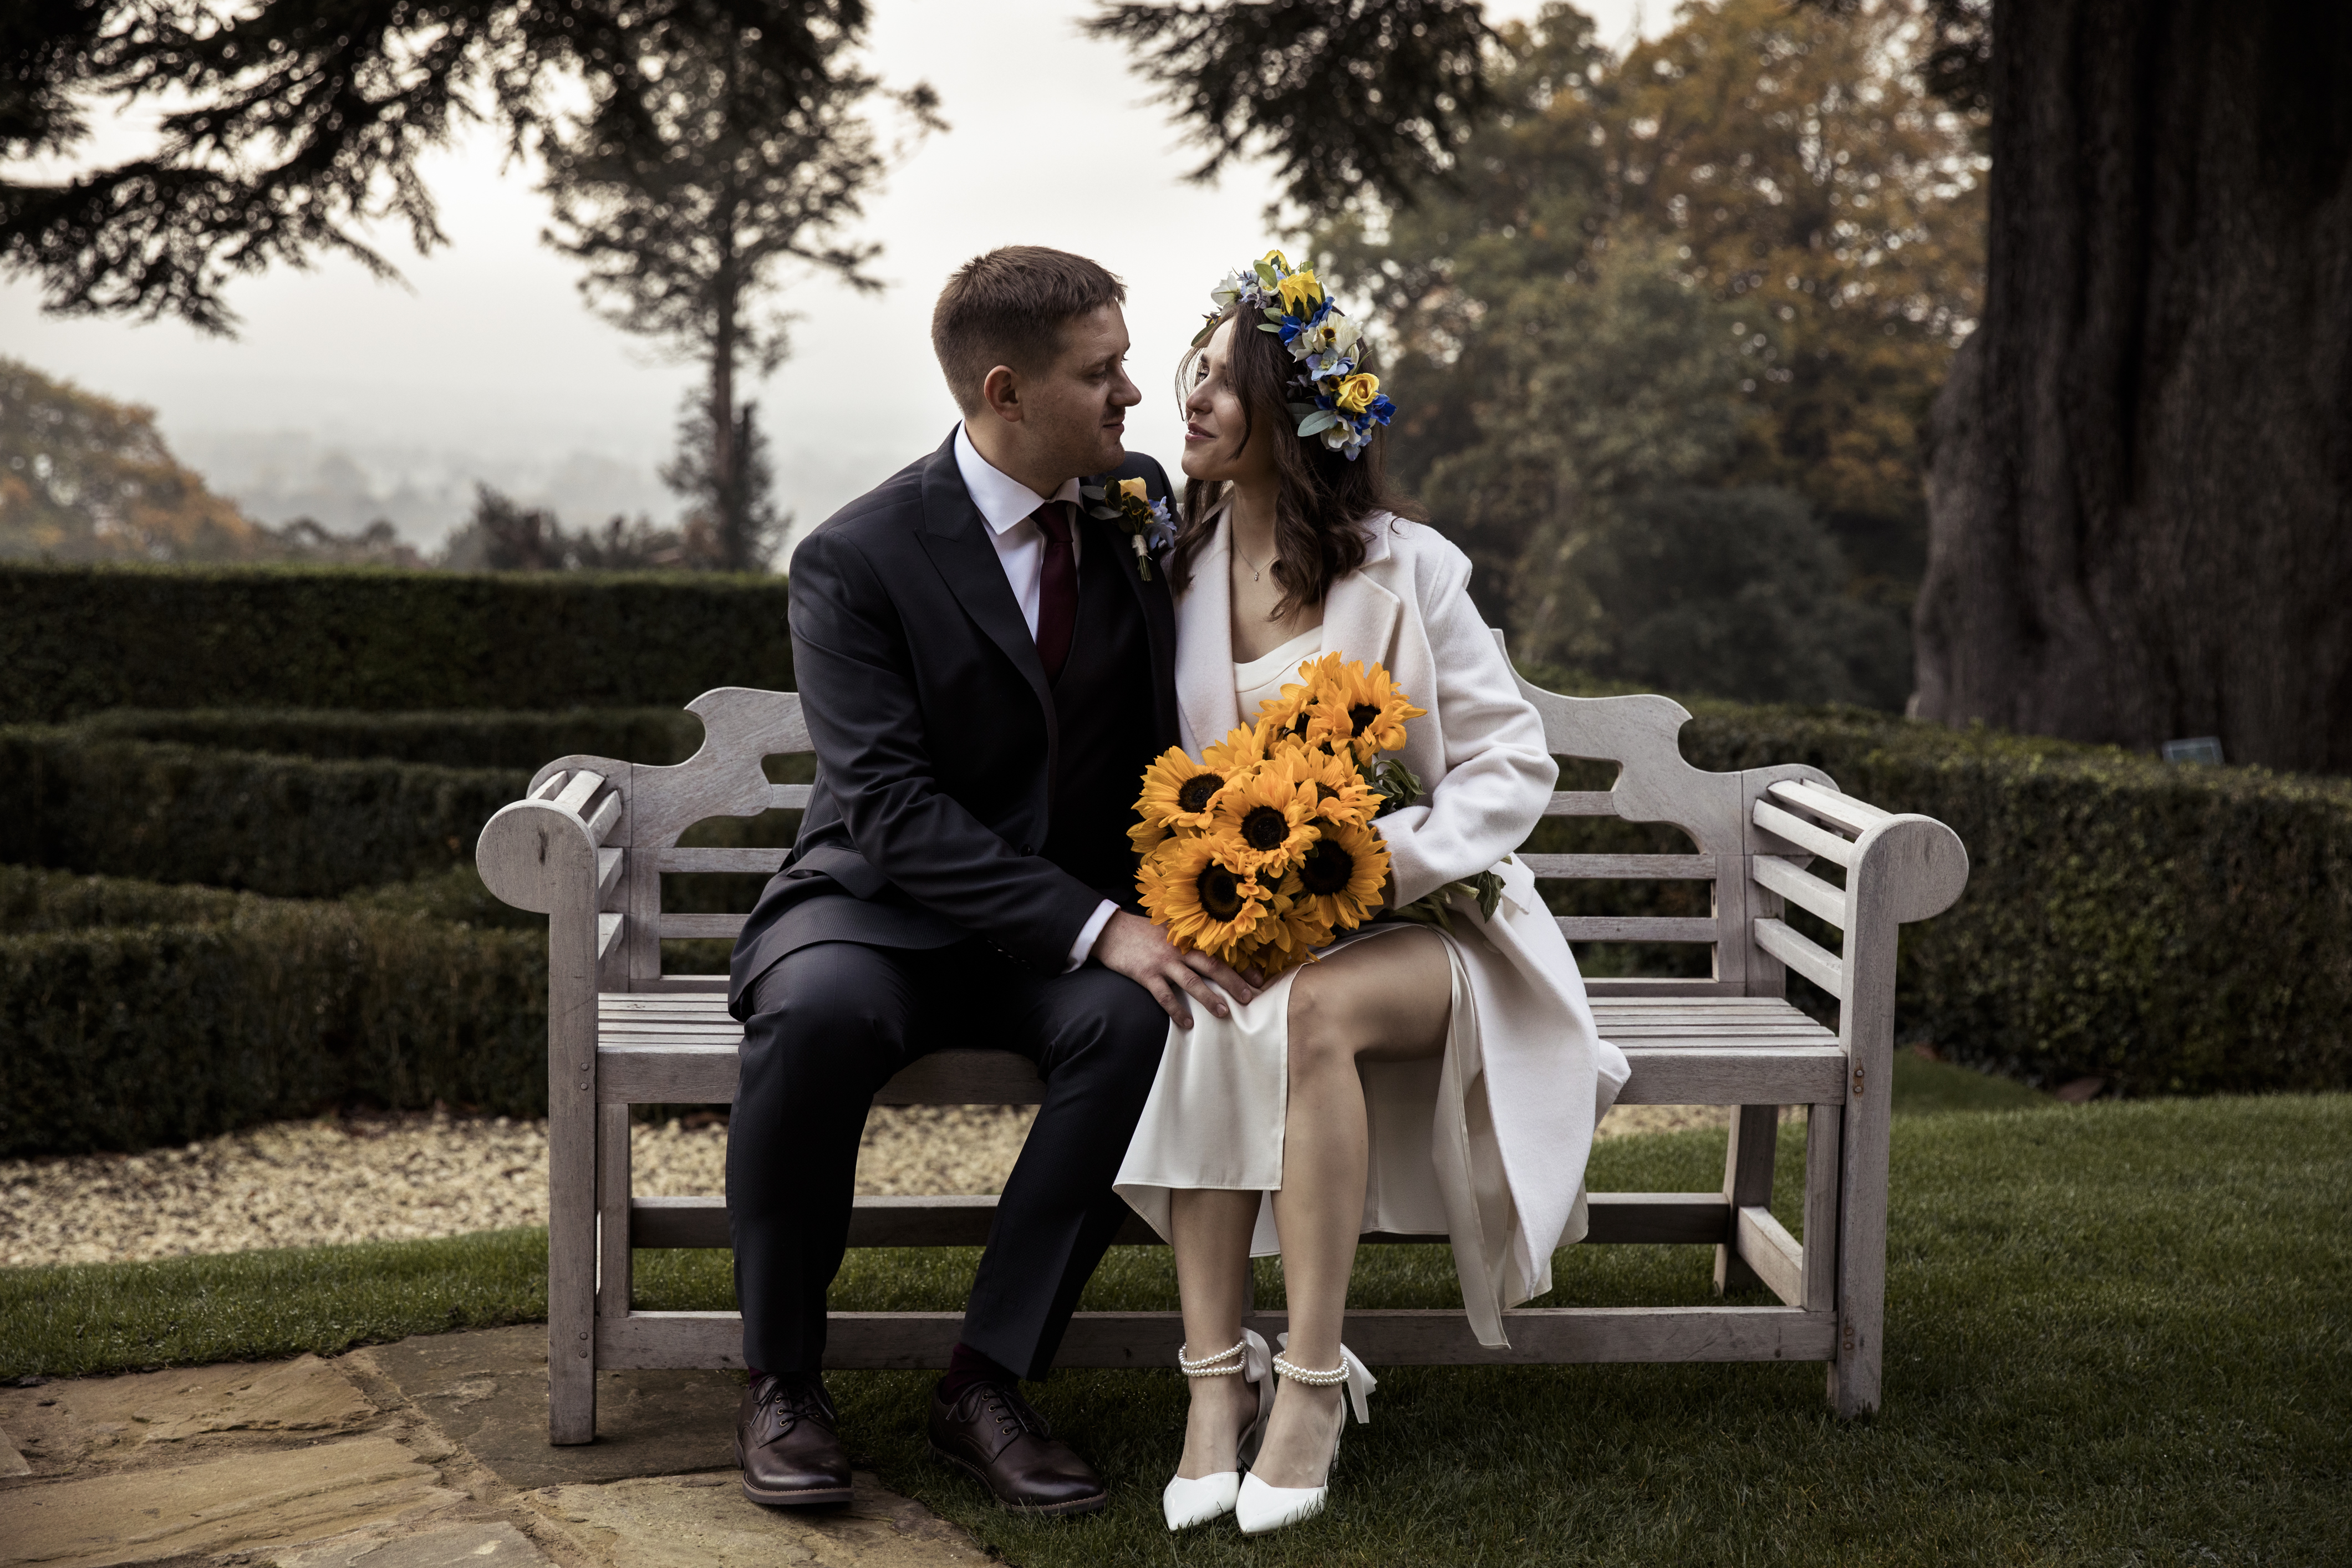 Mariia Bilyk and Vitalij Melynik got married at Hedsor House in November with the help of Bridebook.com